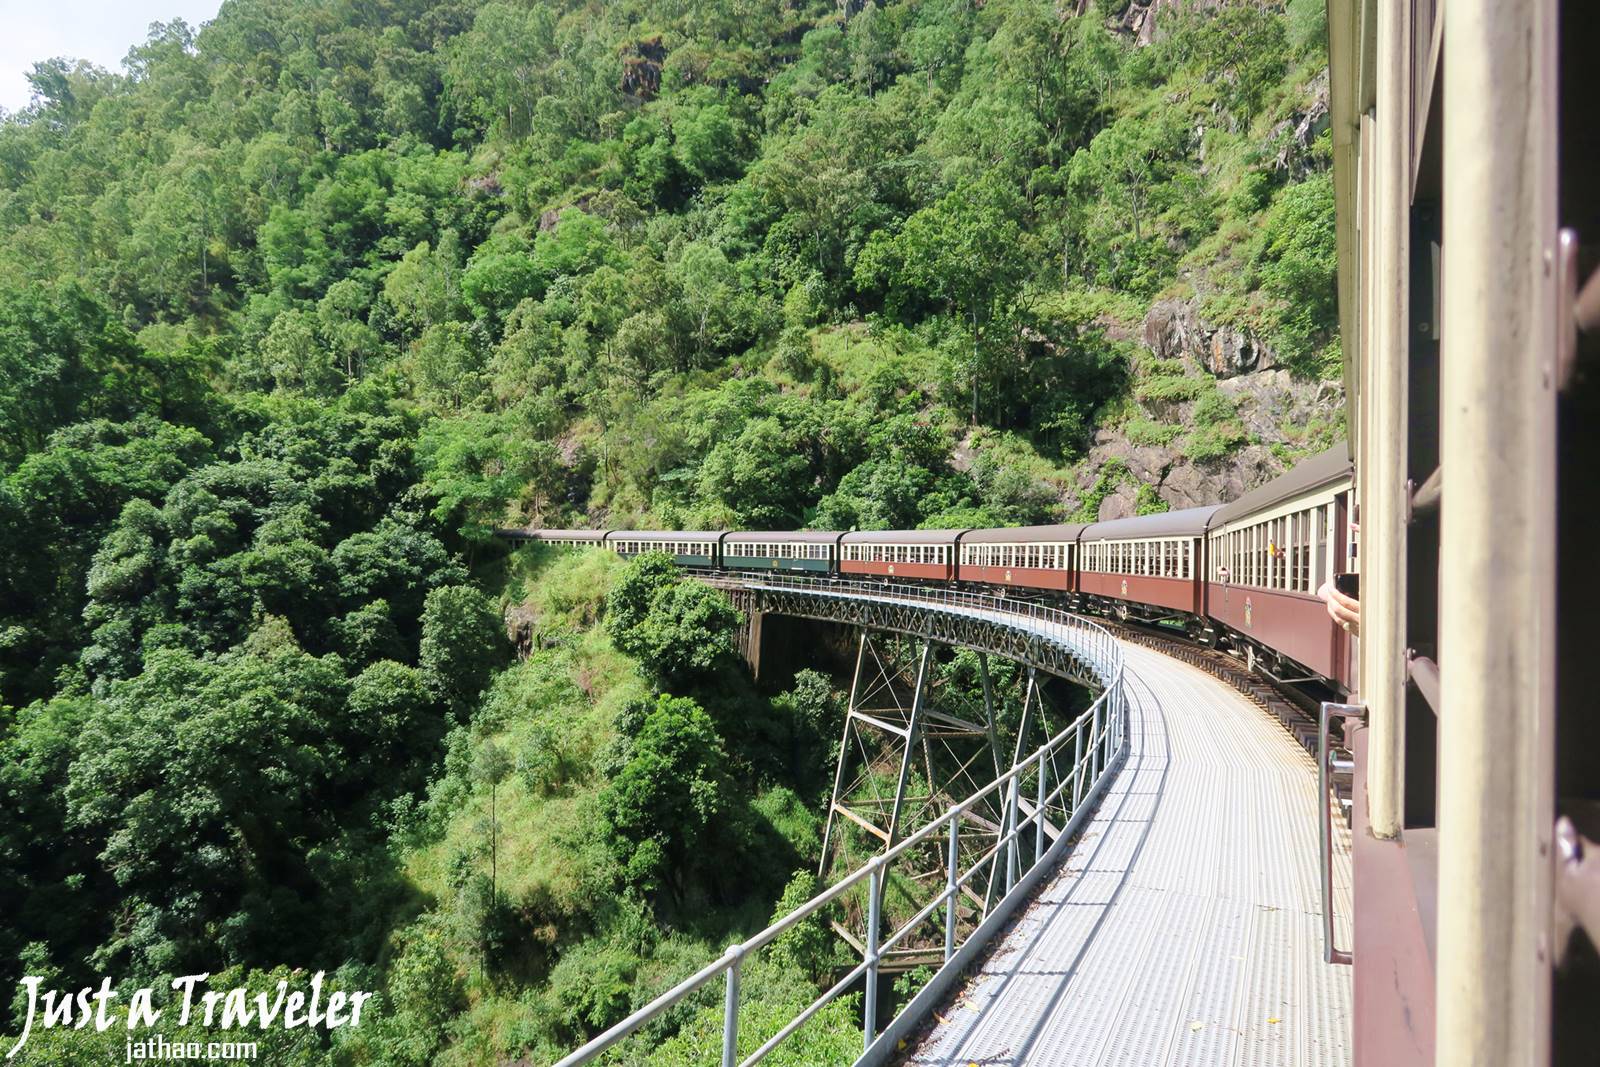 凱恩斯-庫蘭達-庫蘭達交通-庫蘭達觀光火車-自由行-旅遊-澳洲-Cairns-Kuranda-Scenic-Railway-Travel-Tourist-Attraction-Australia